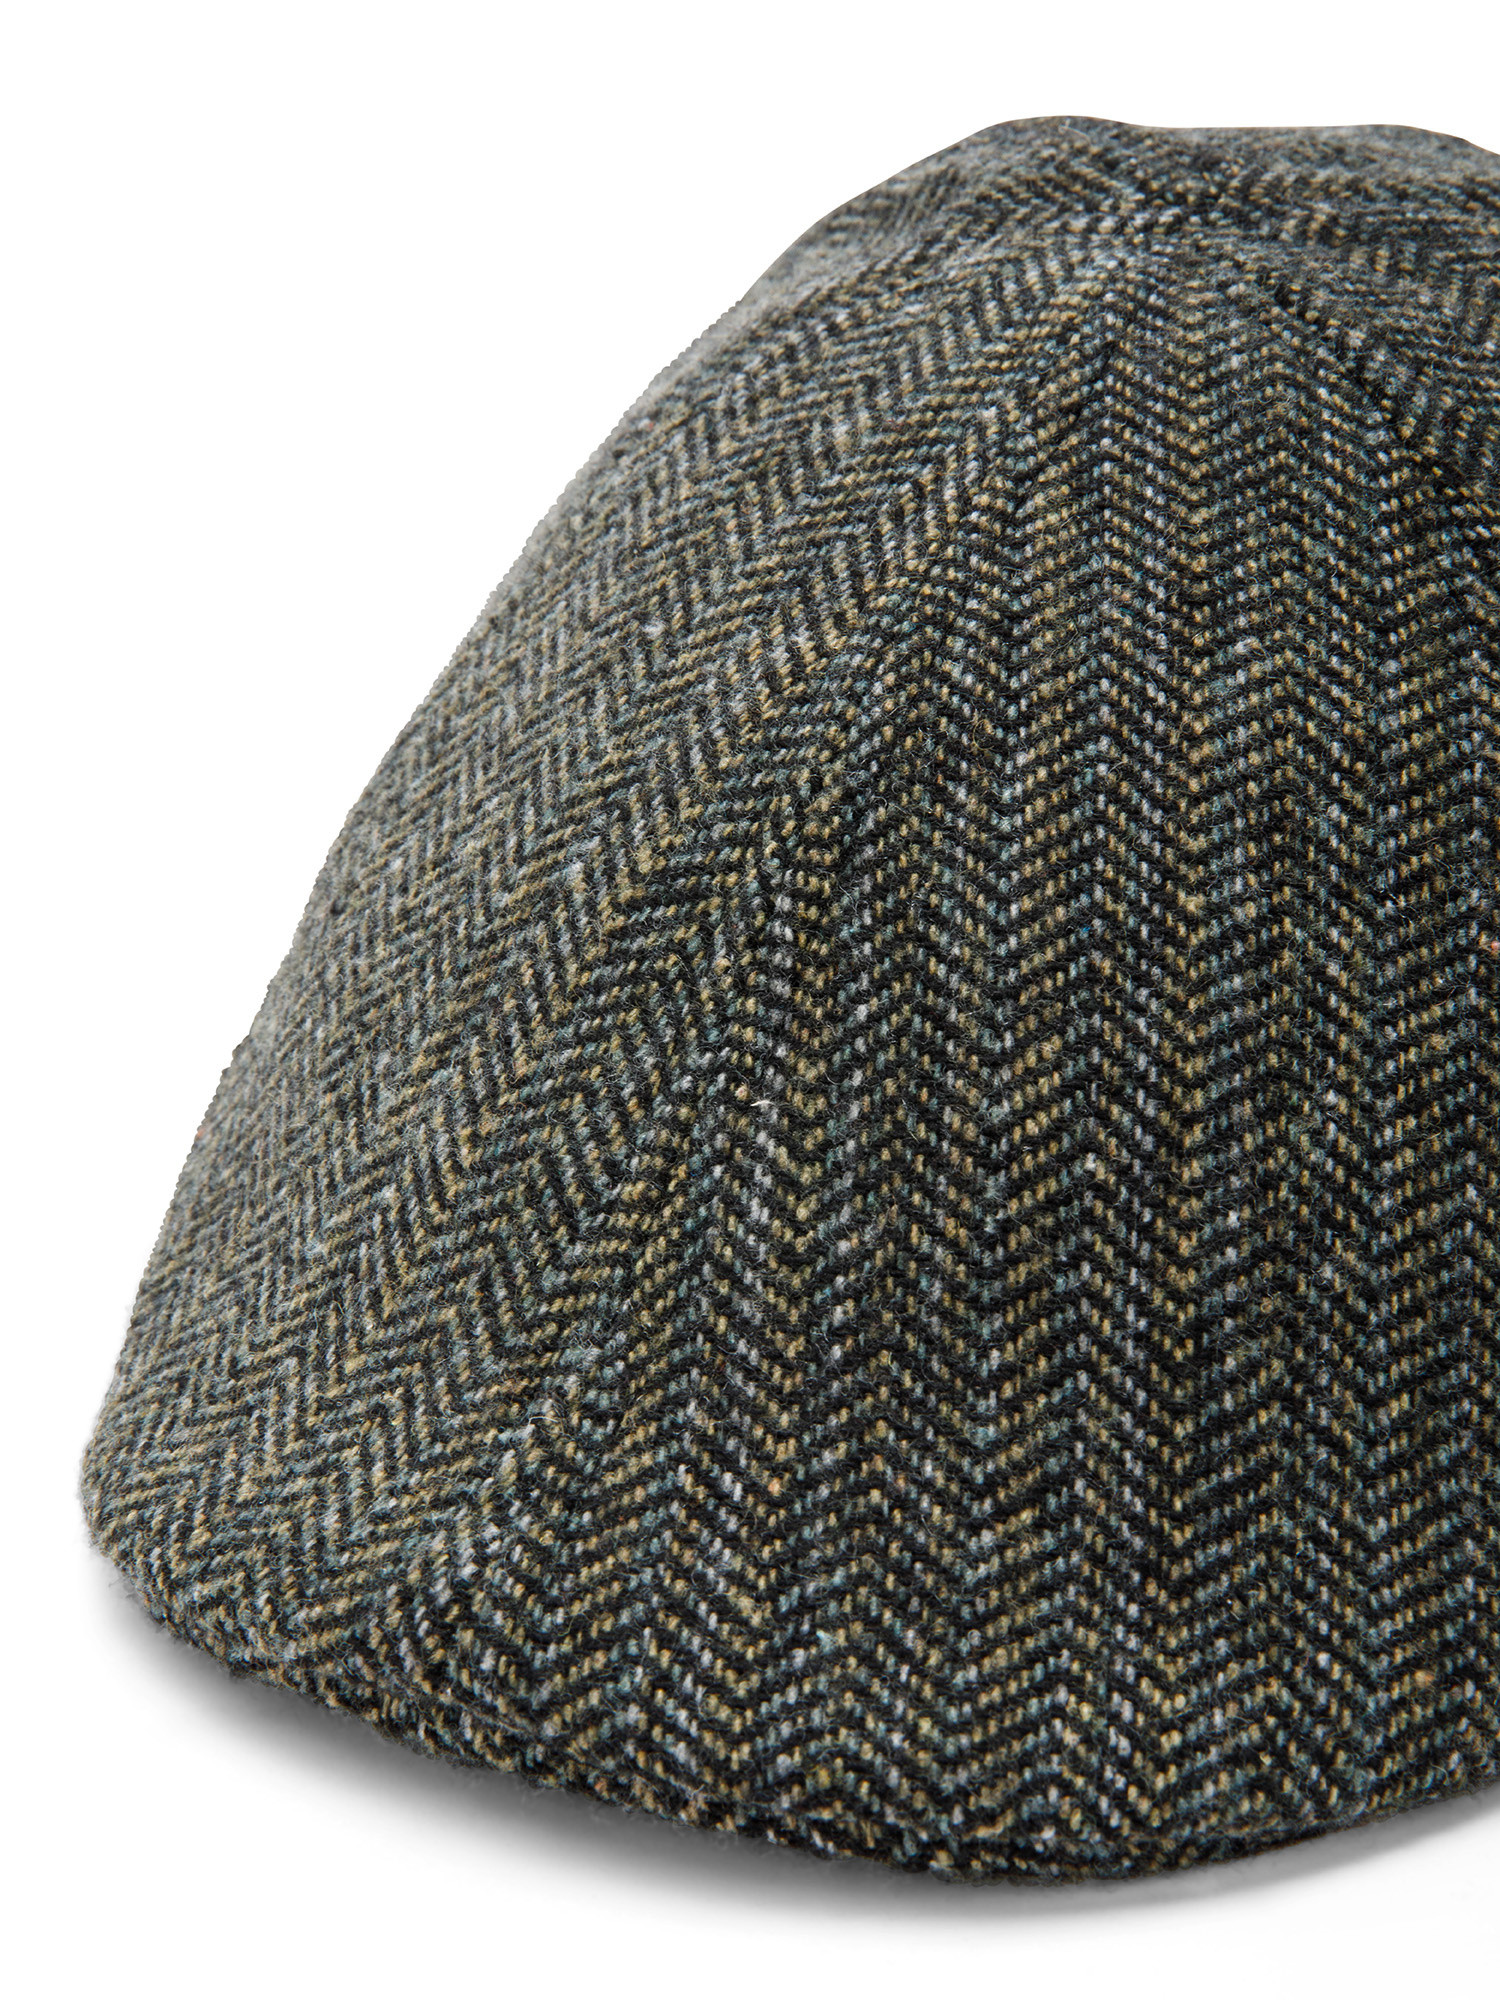 Luca D'Altieri - Flat cap in herringbone fabric, Olive Green, large image number 1